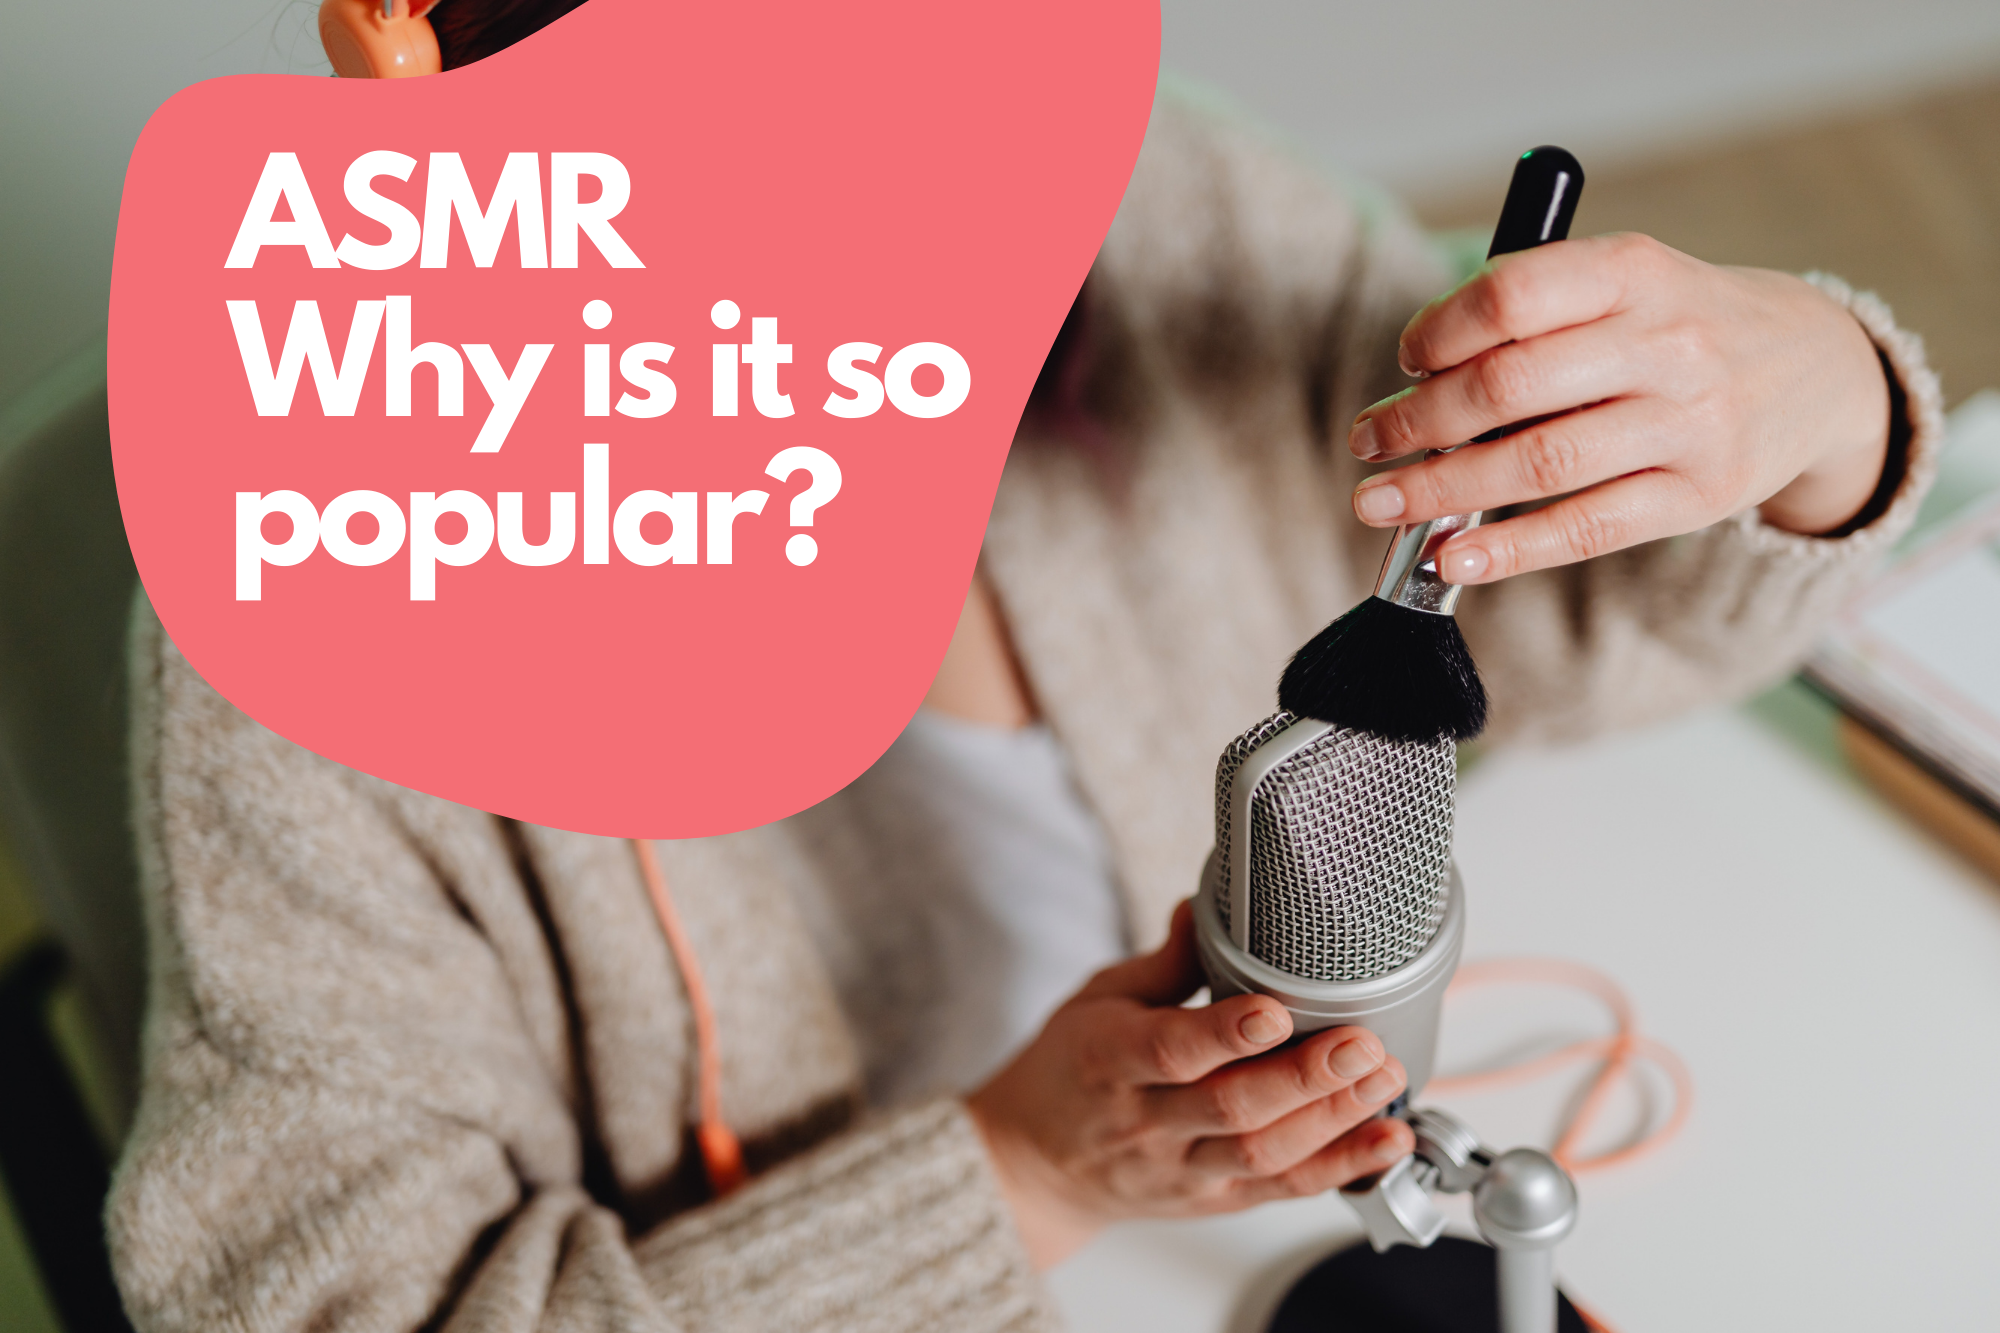 Why is ASMR so popular?